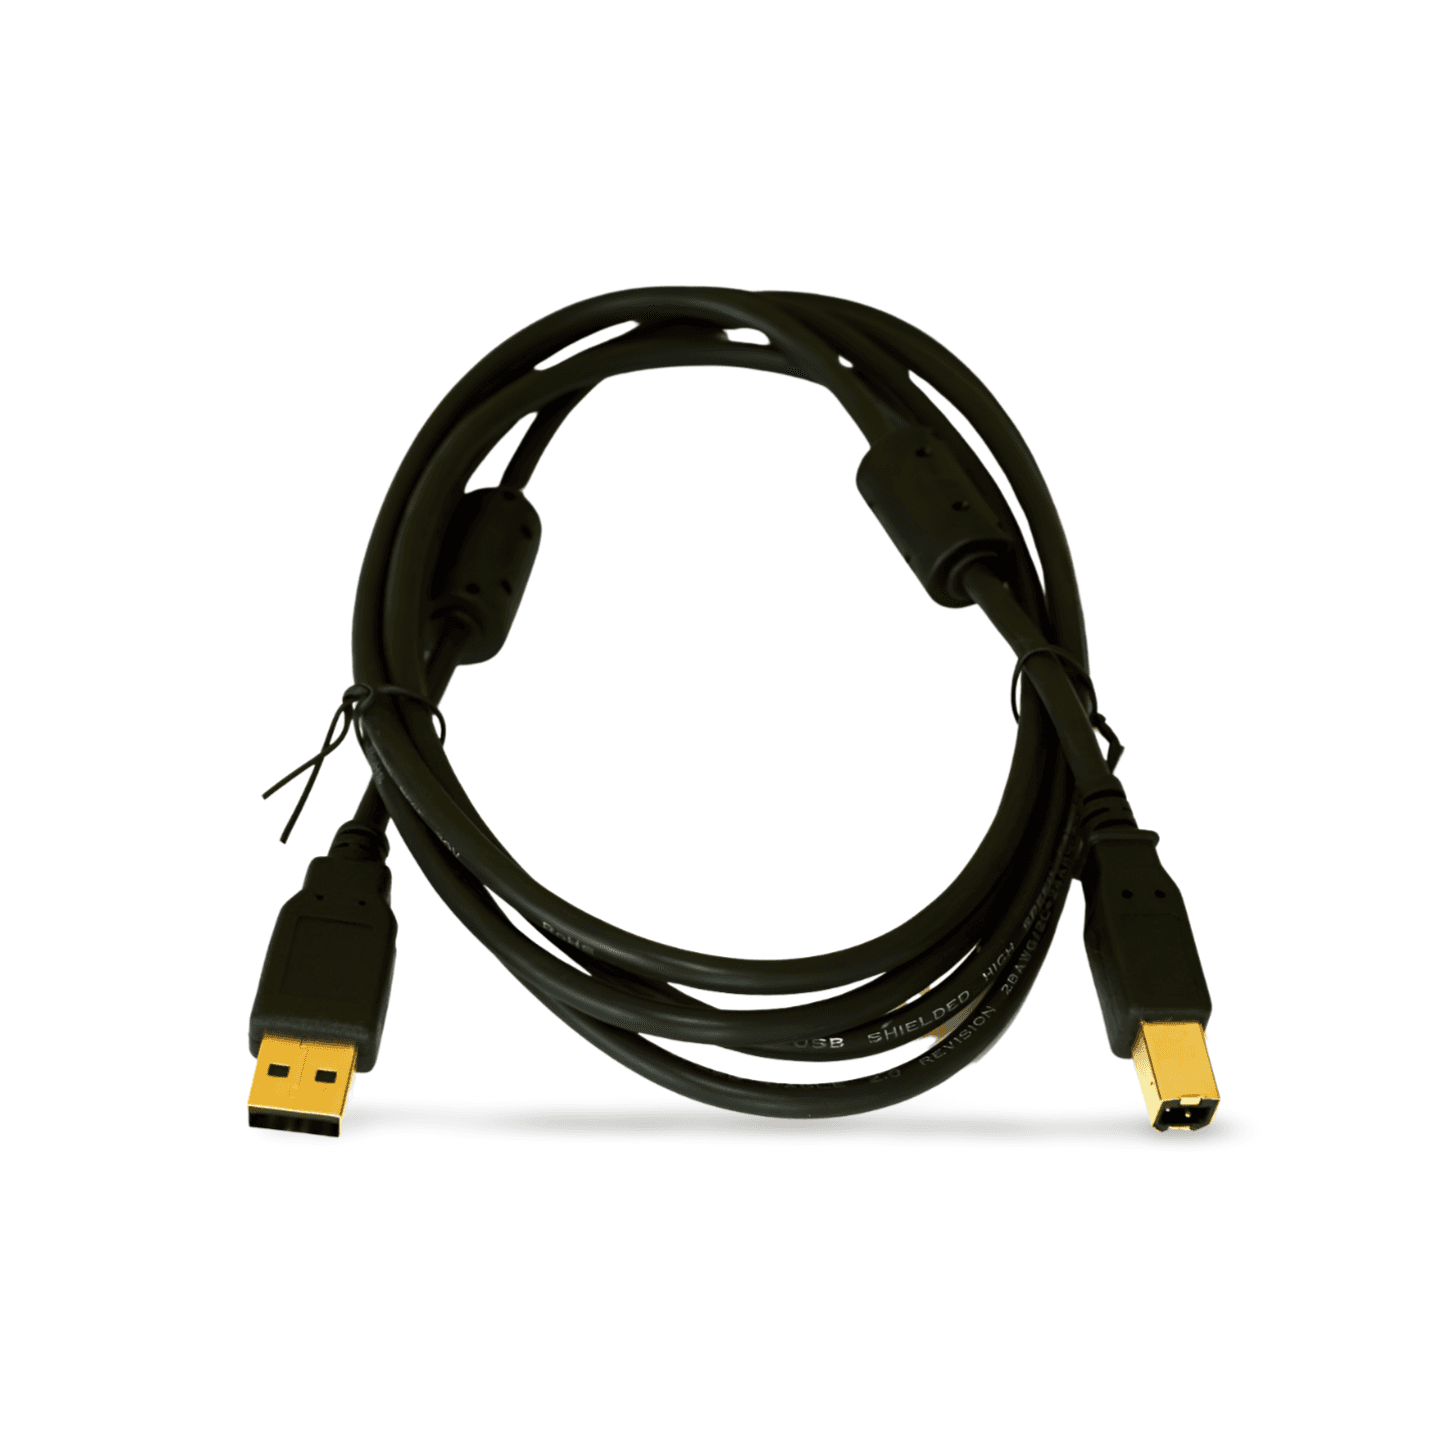 6ft USB 2.0 Cable Dual Ferrite Chokes Type A to Type B (U023 006) black